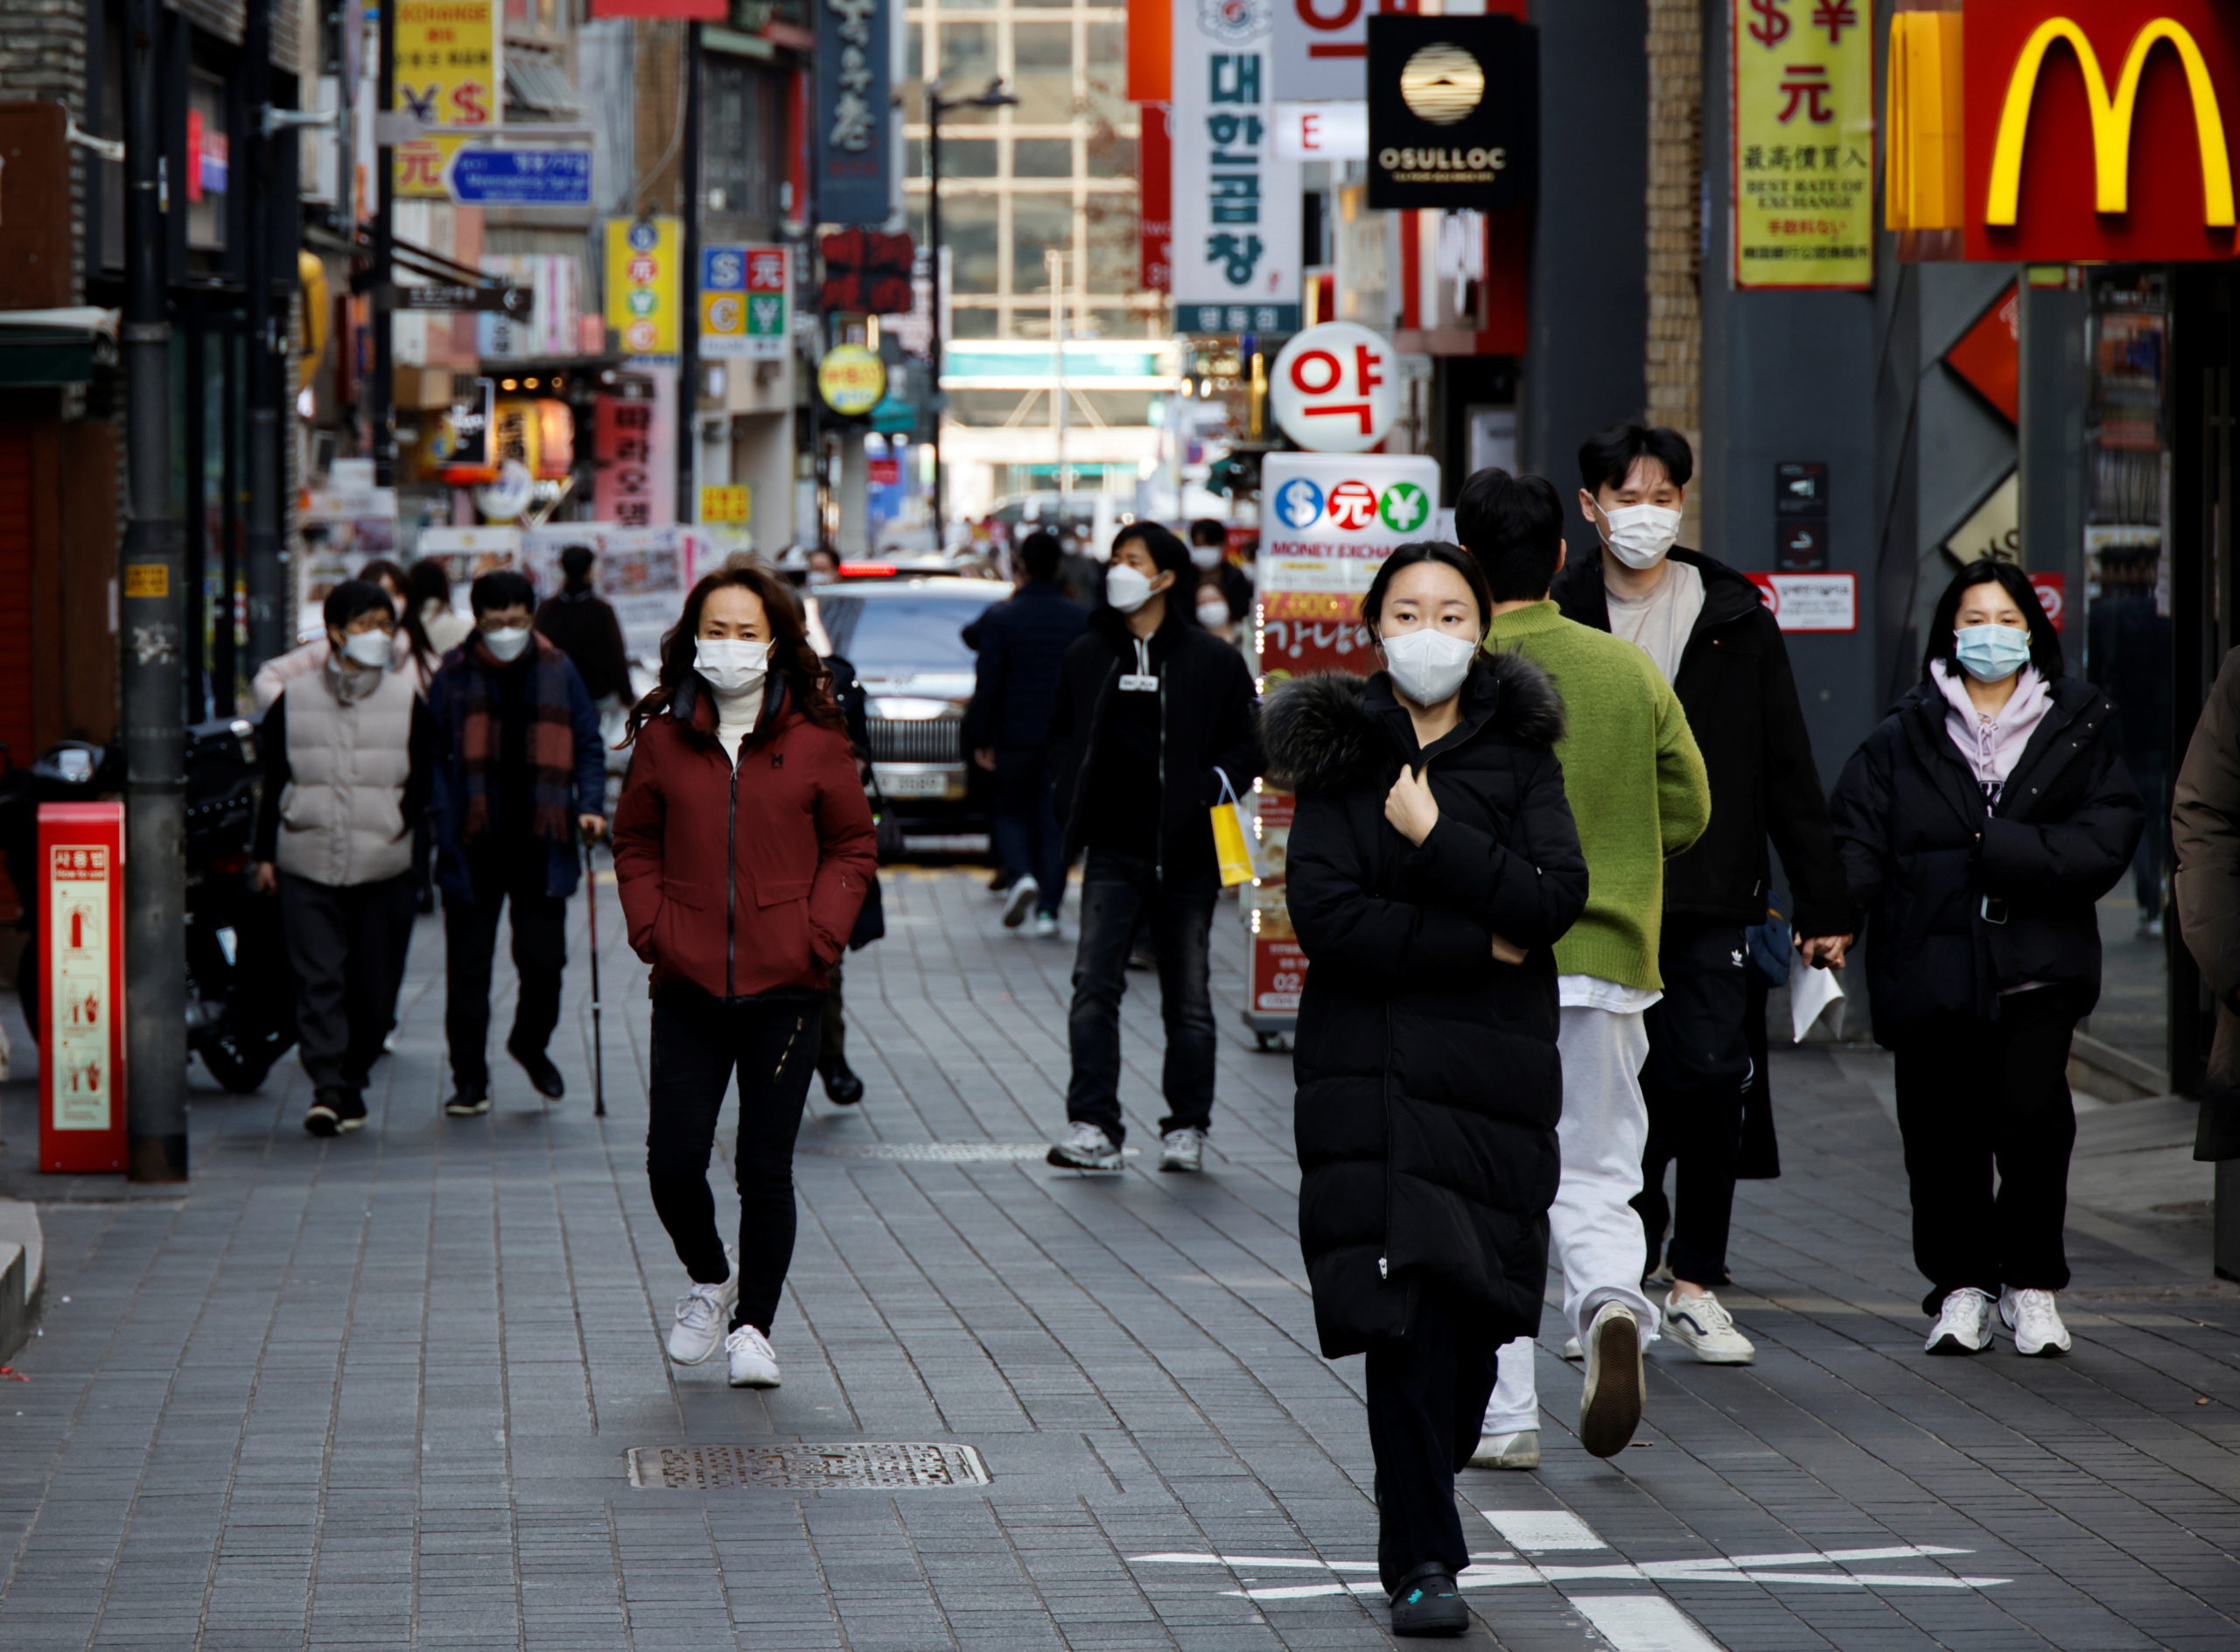 FILE PHOTO: People wearing masks walk in a shopping district amid the coronavirus disease (COVID-19) pandemic in Seoul, South Korea, November 29, 2021. REUTERS/Heo Ran